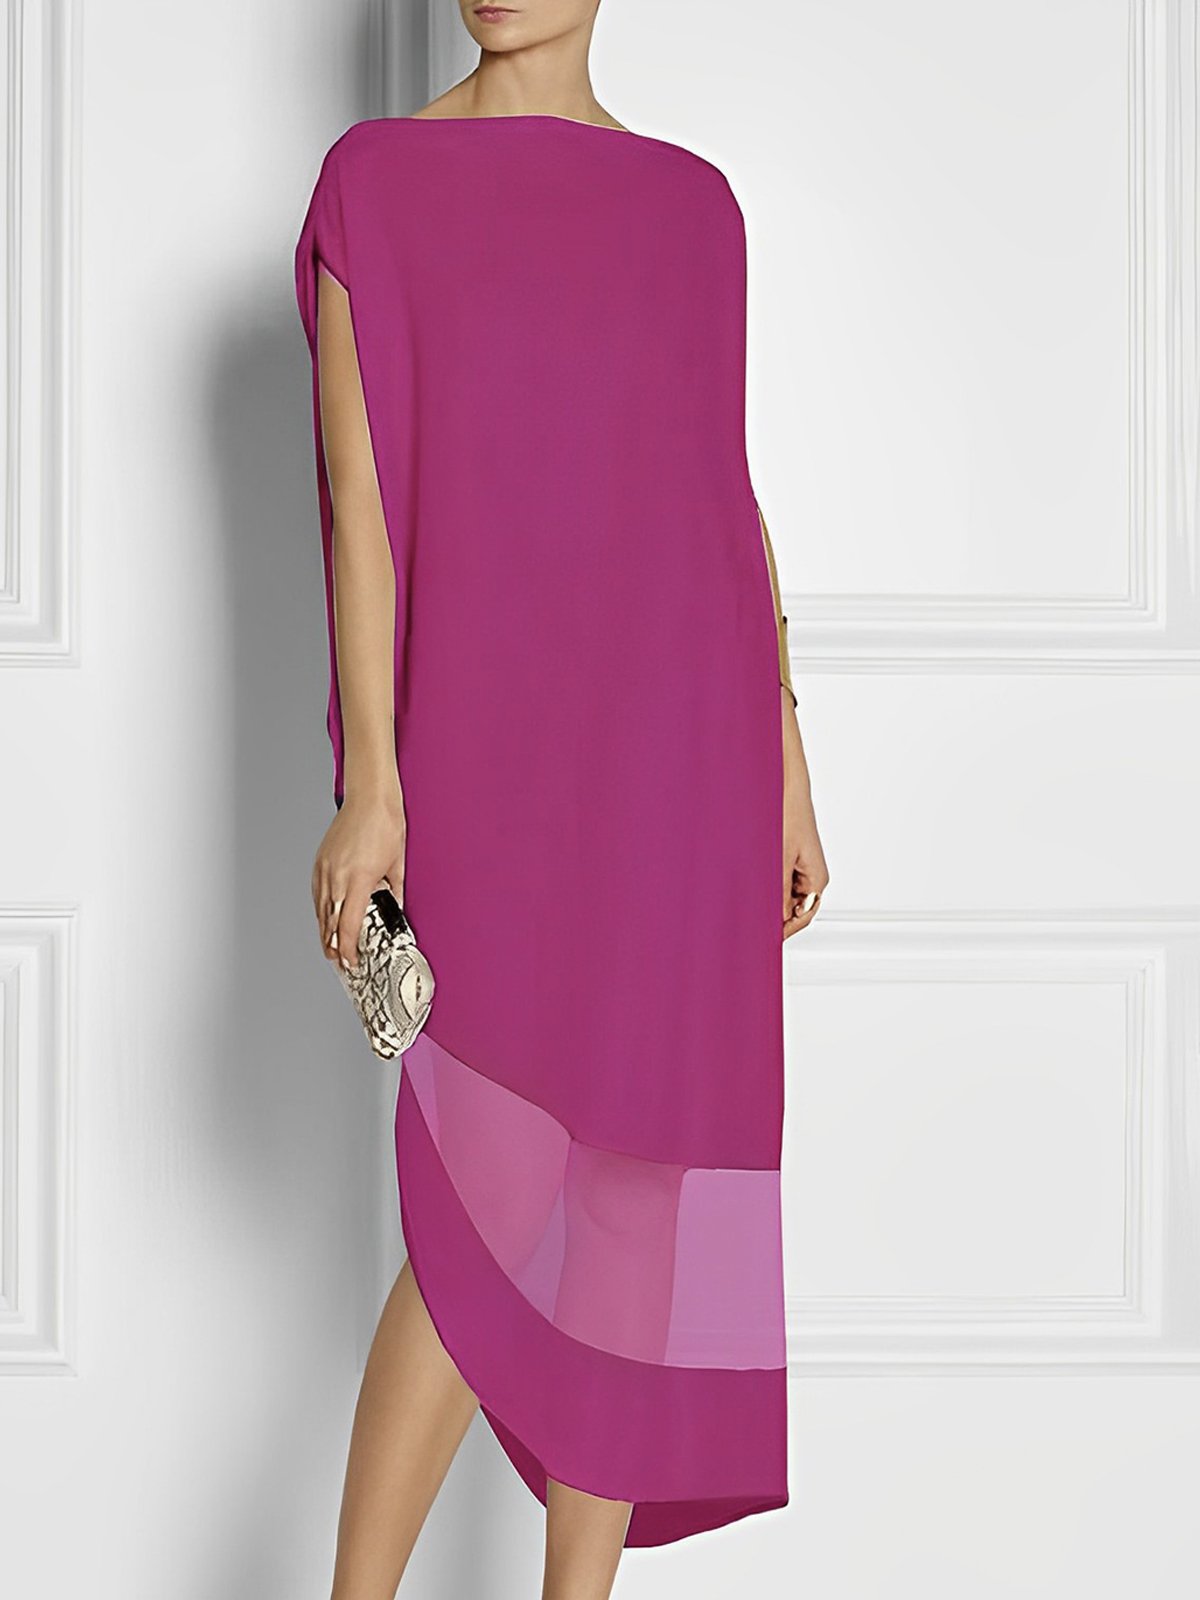 Kurzarm Regelmäßige Passform Elegant Unifarben Kleid